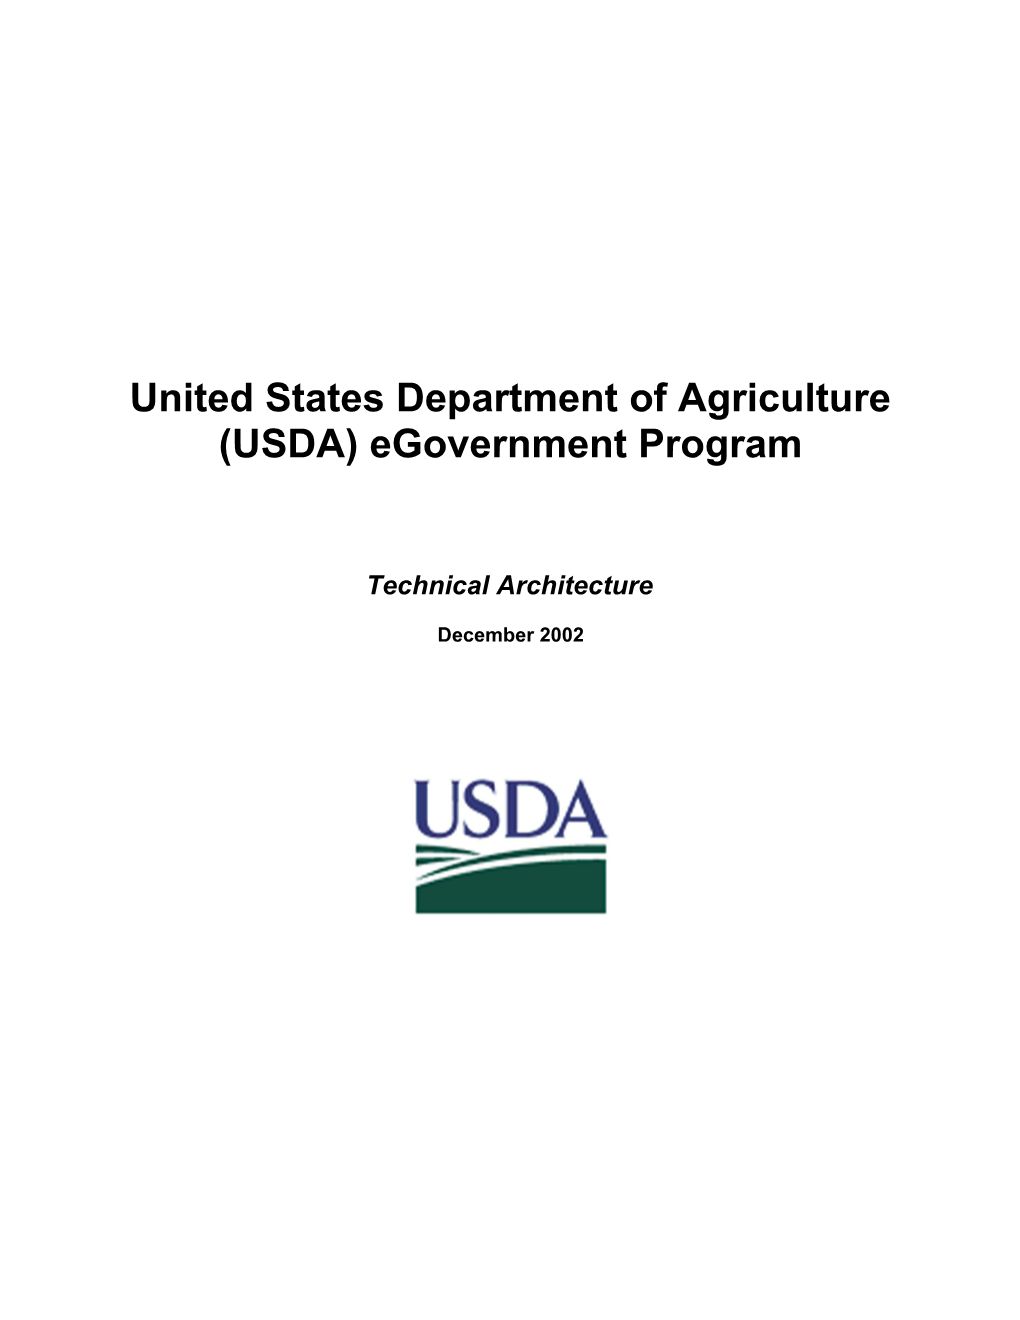 United States Department of Agriculture (USDA) Egovernment Program